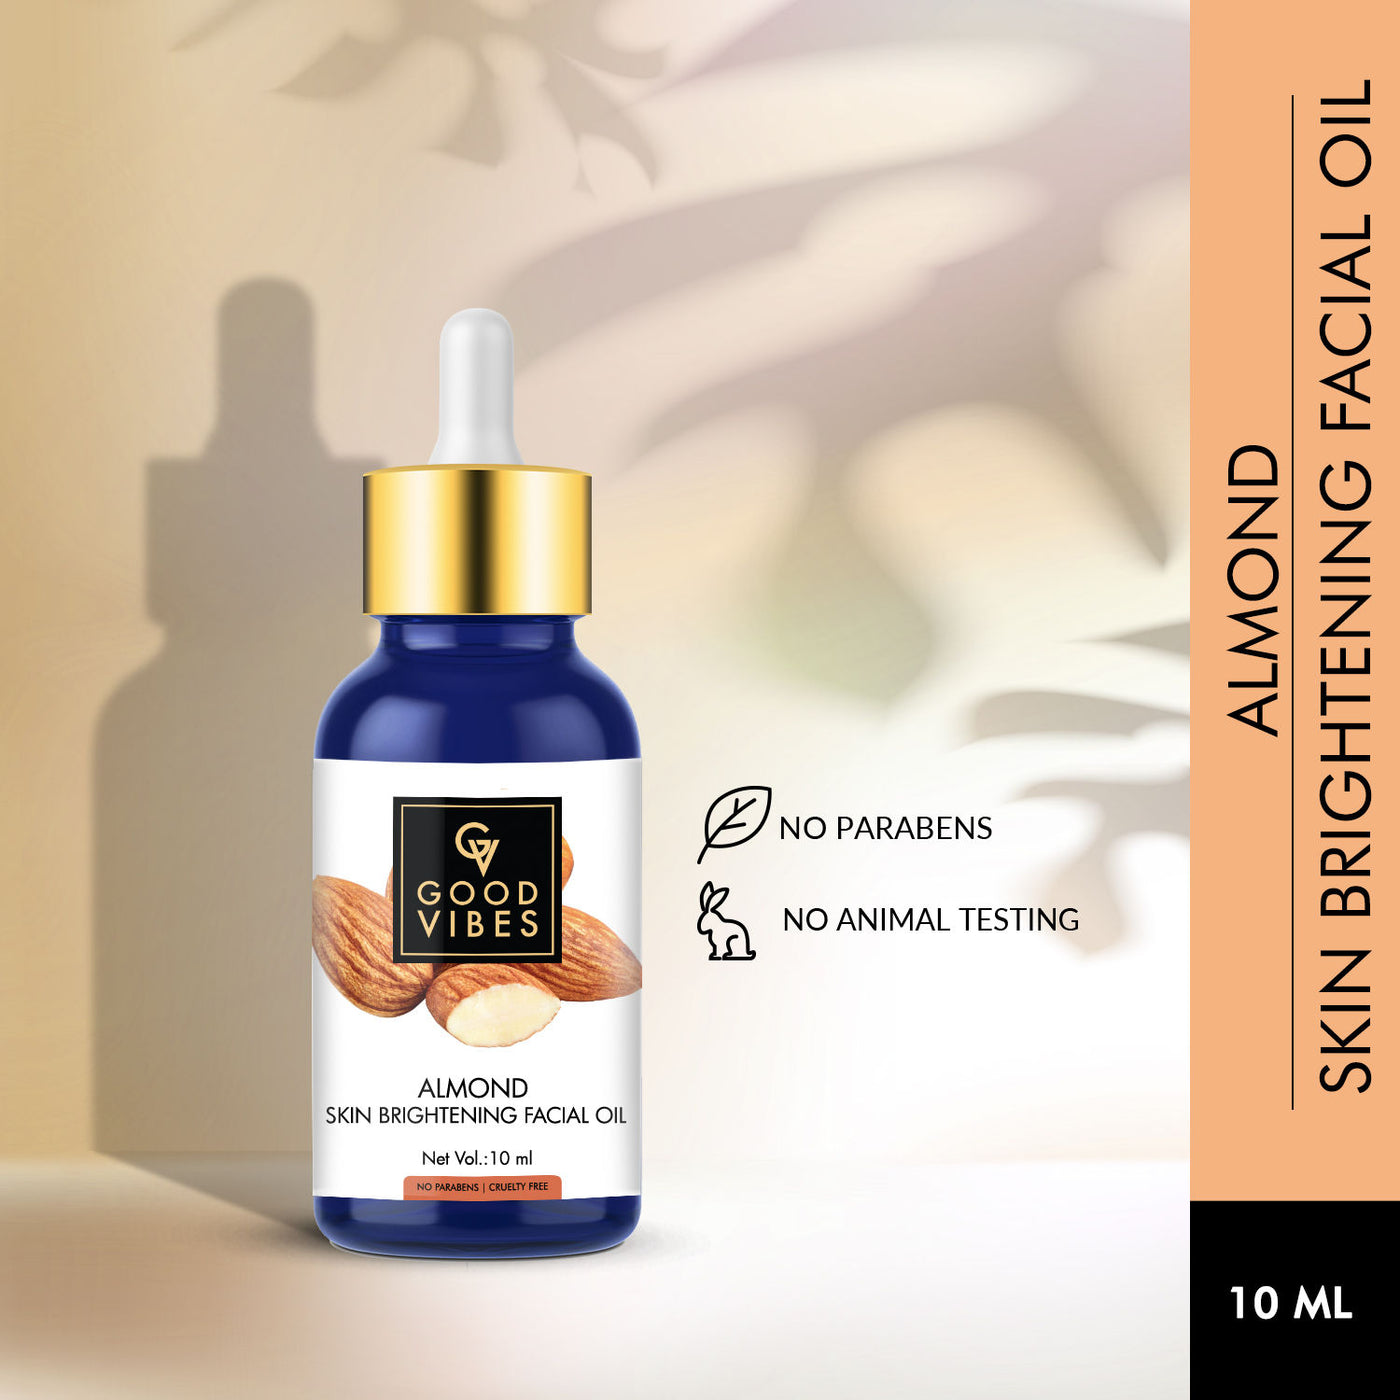 Good Vibes Skin Brightening Facial Oil - Almond (10 ml) - 1